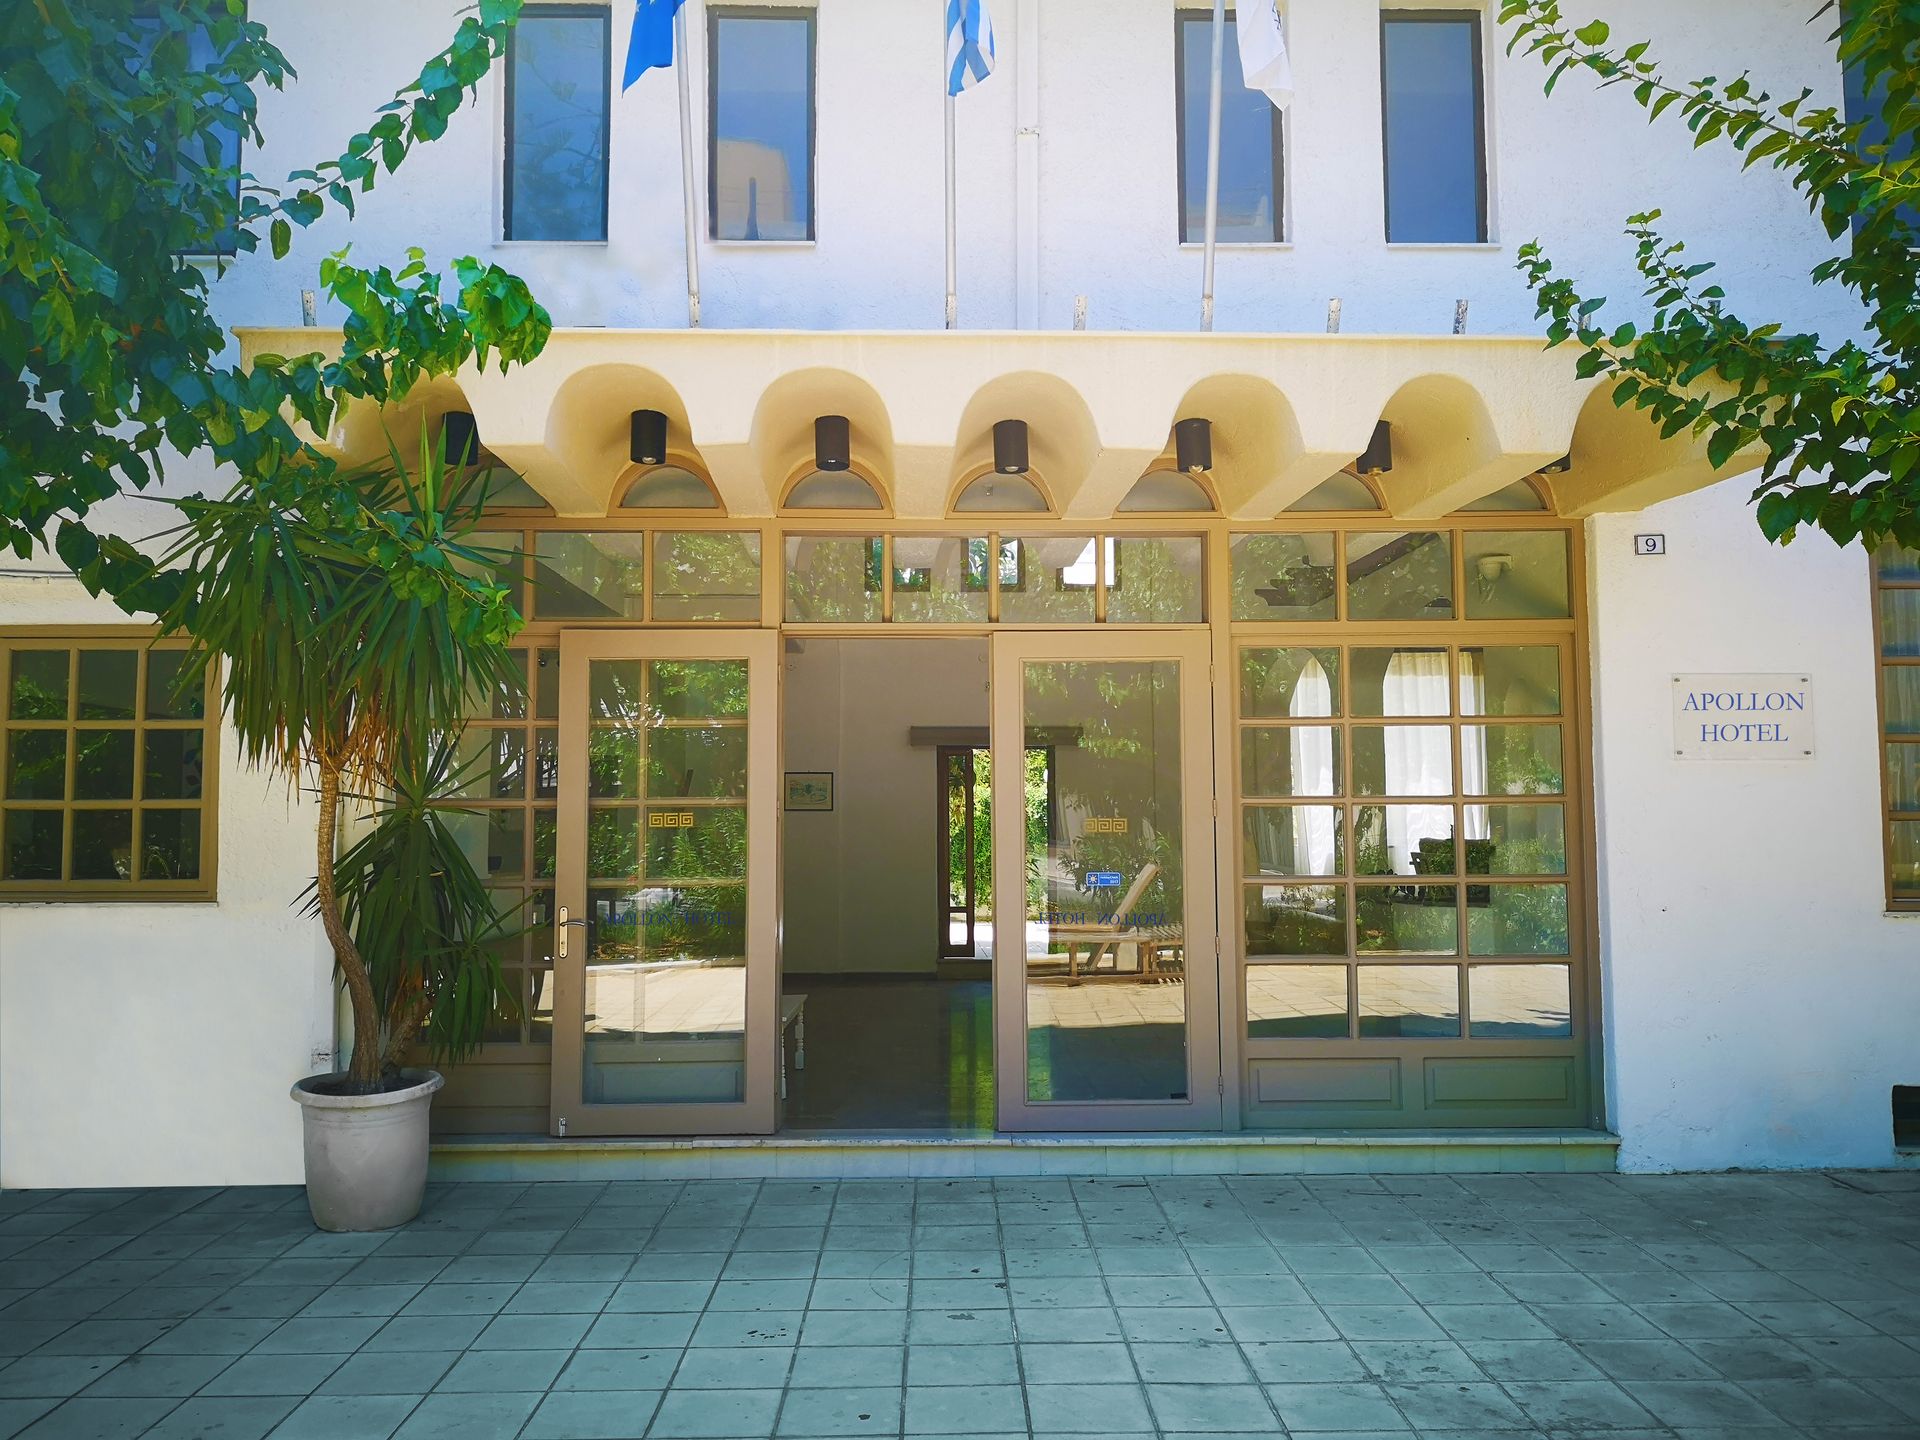 Apollon Hotel - Άγιος Νικόλαος, Κρήτη ✦ 2 Ημέρες (1 Διανυκτέρευση) ✦ 2 άτομα ✦ Πρωινό ✦ 10/04/2022 έως 30/09/2022 ✦ Υπέροχη Τοποθεσία!